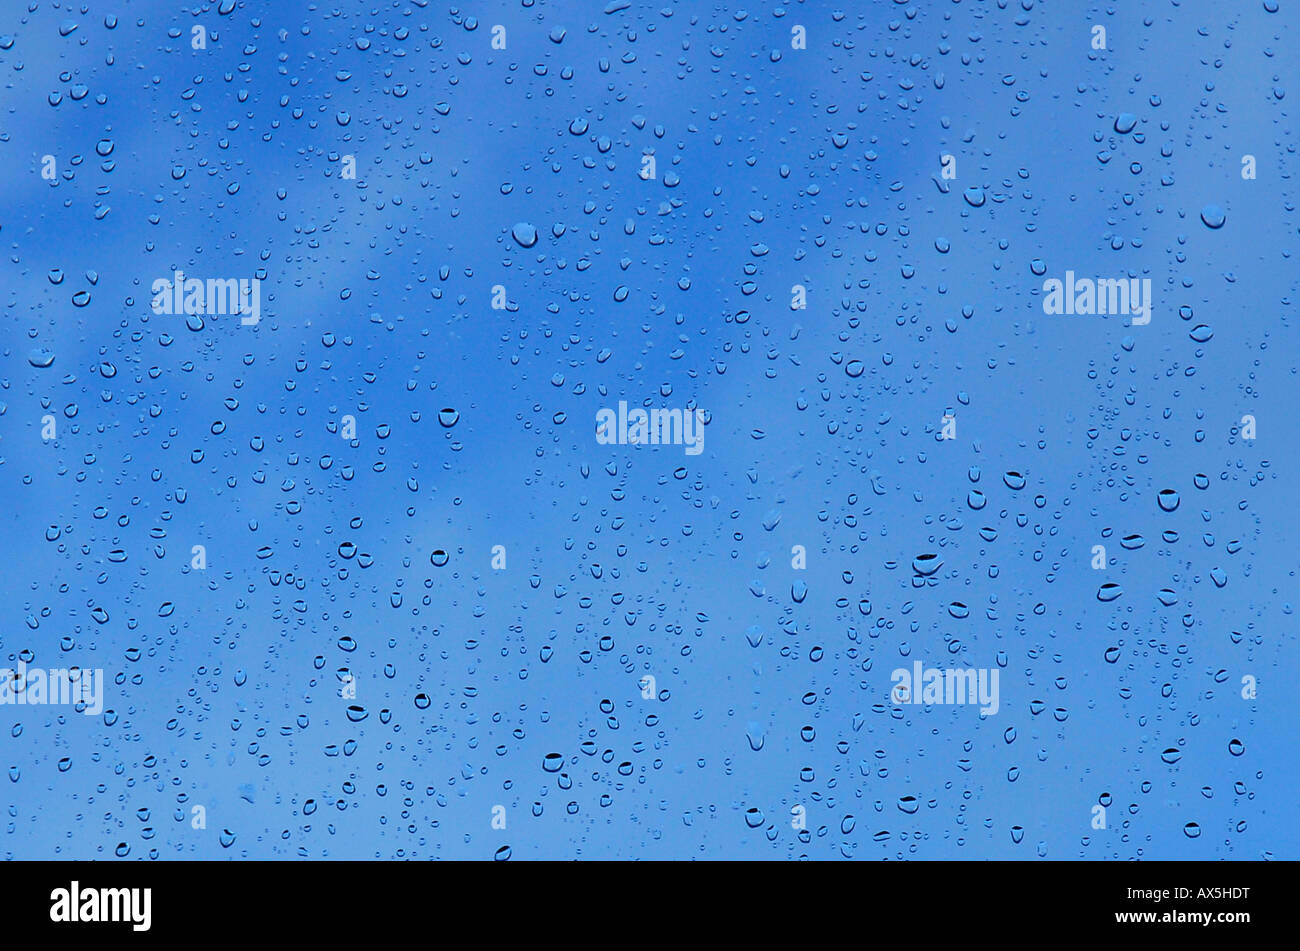 Raindrops on a window pane Stock Photo